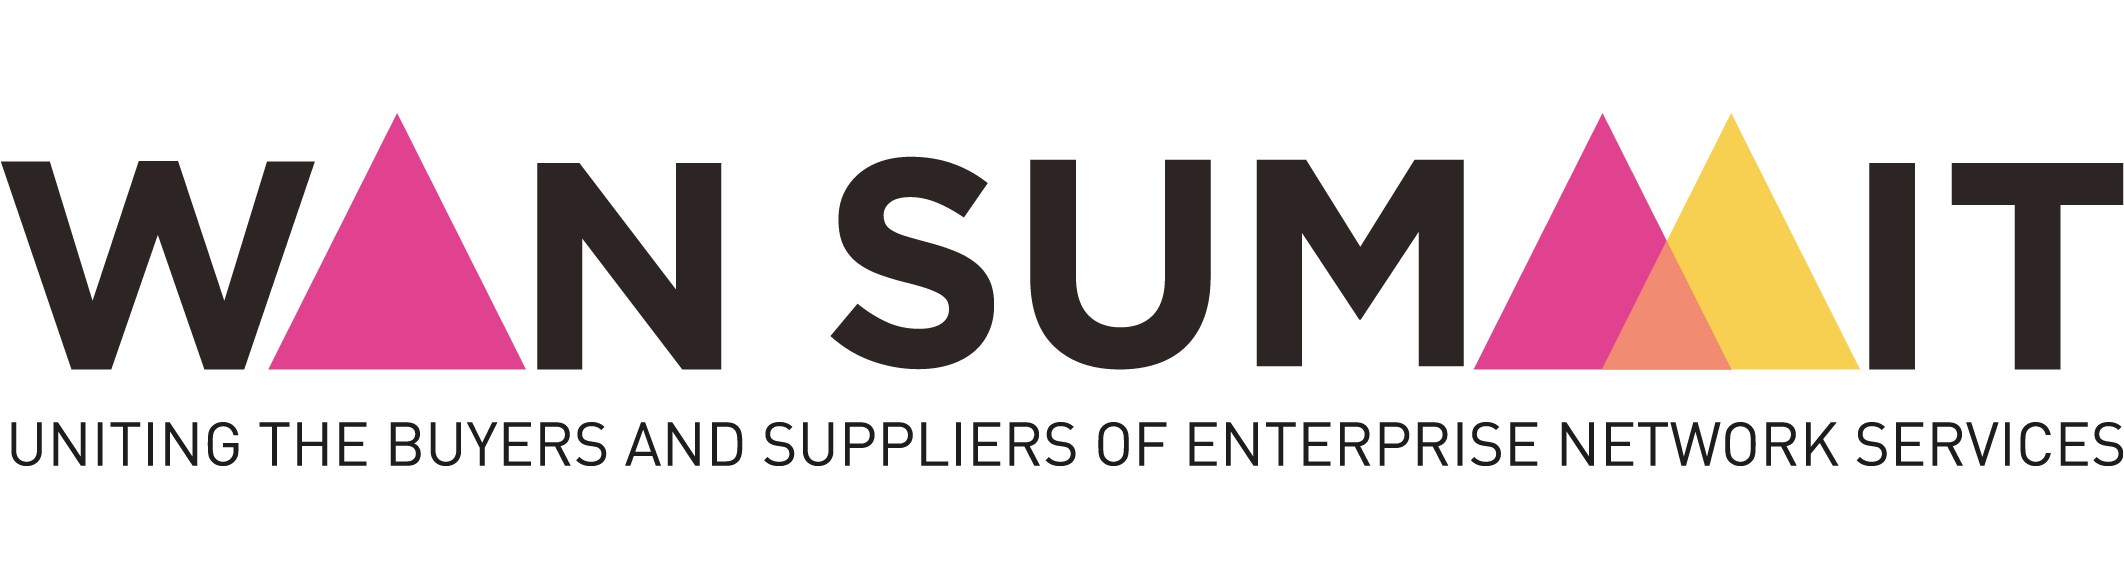 wan summit logo